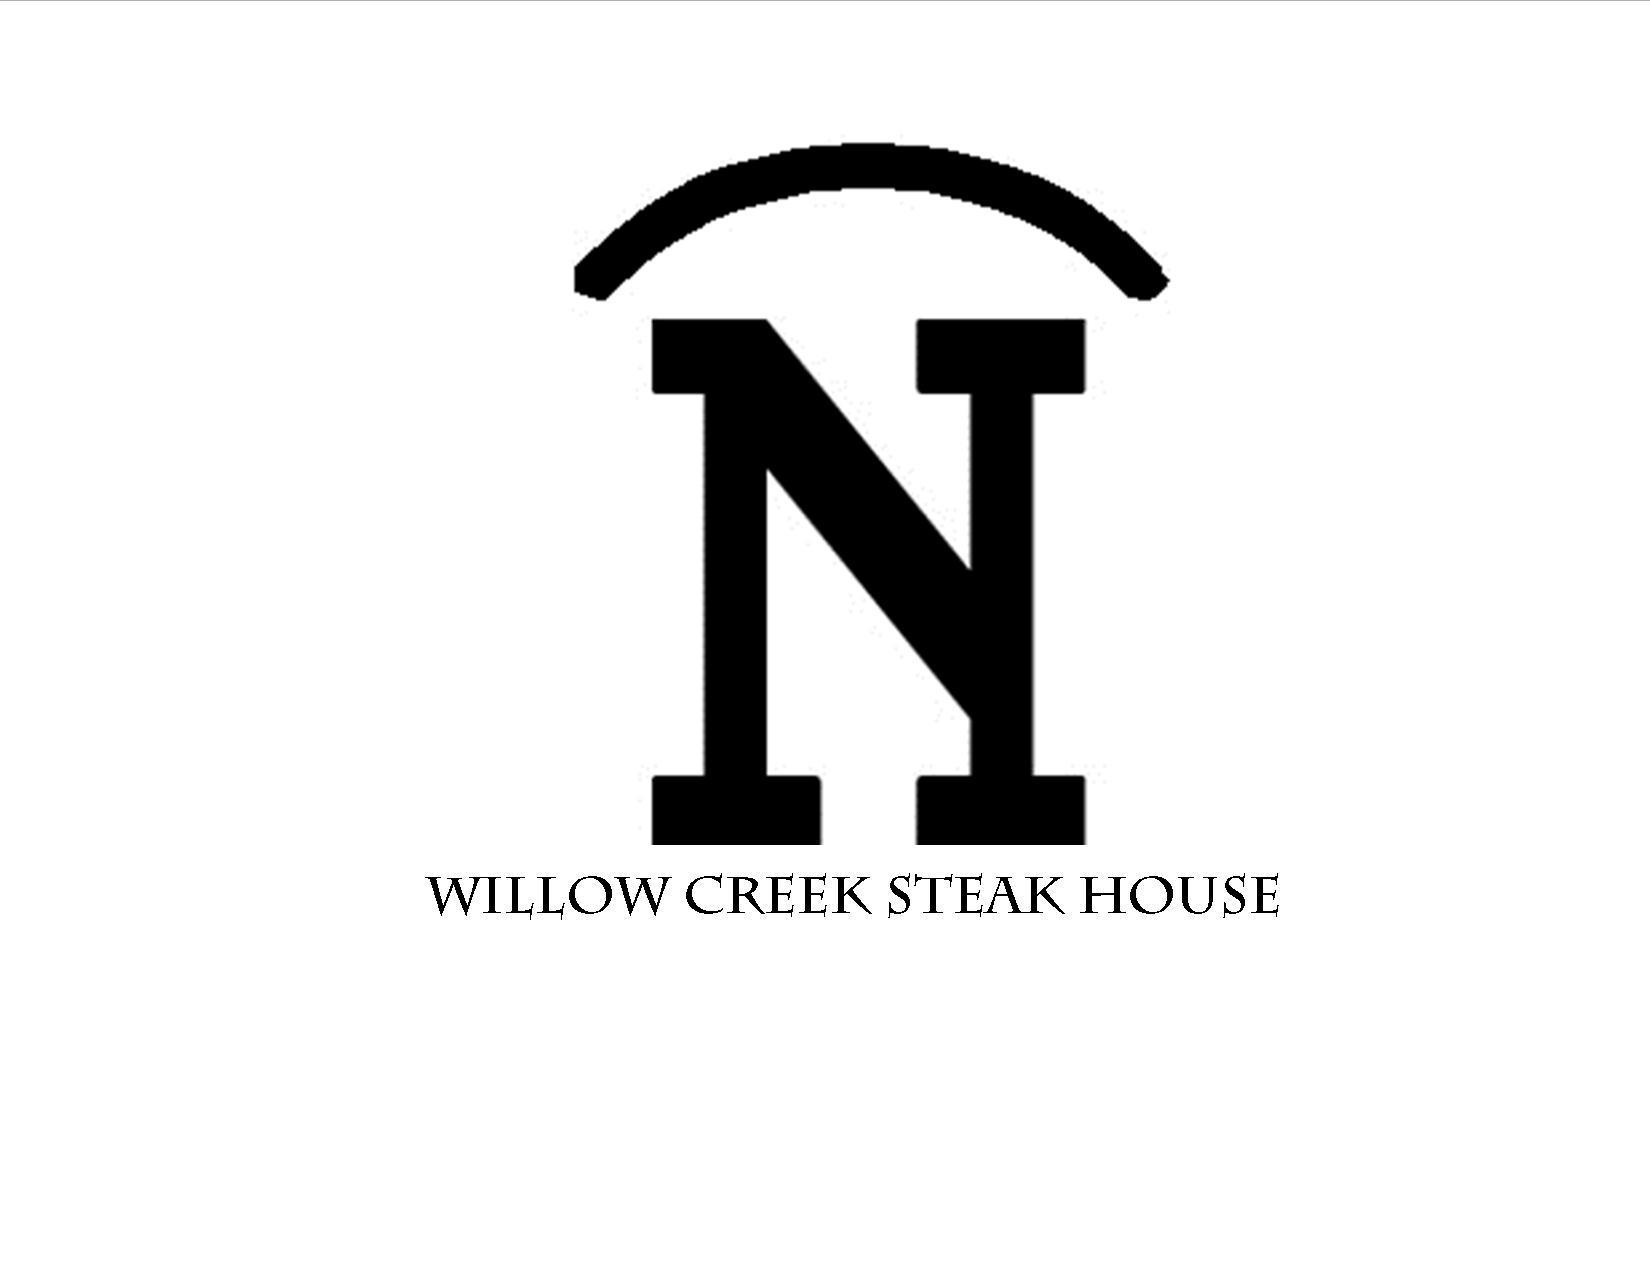 Willow Creek Steak House